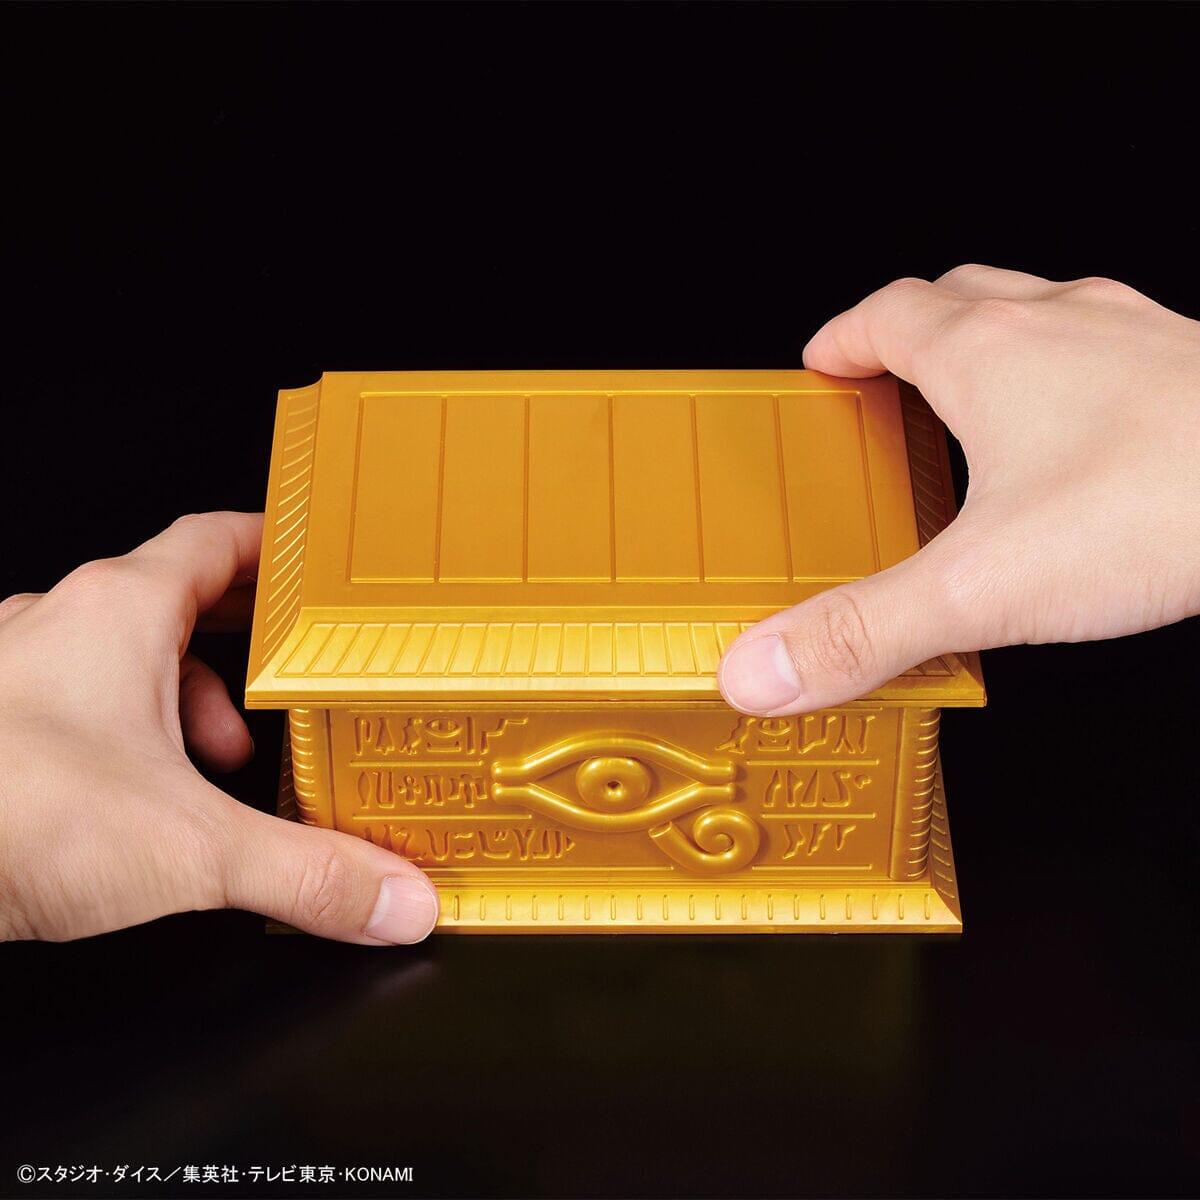 Bandai Millennium Puzzle assembles a life-sized collectible - 9to5Toys